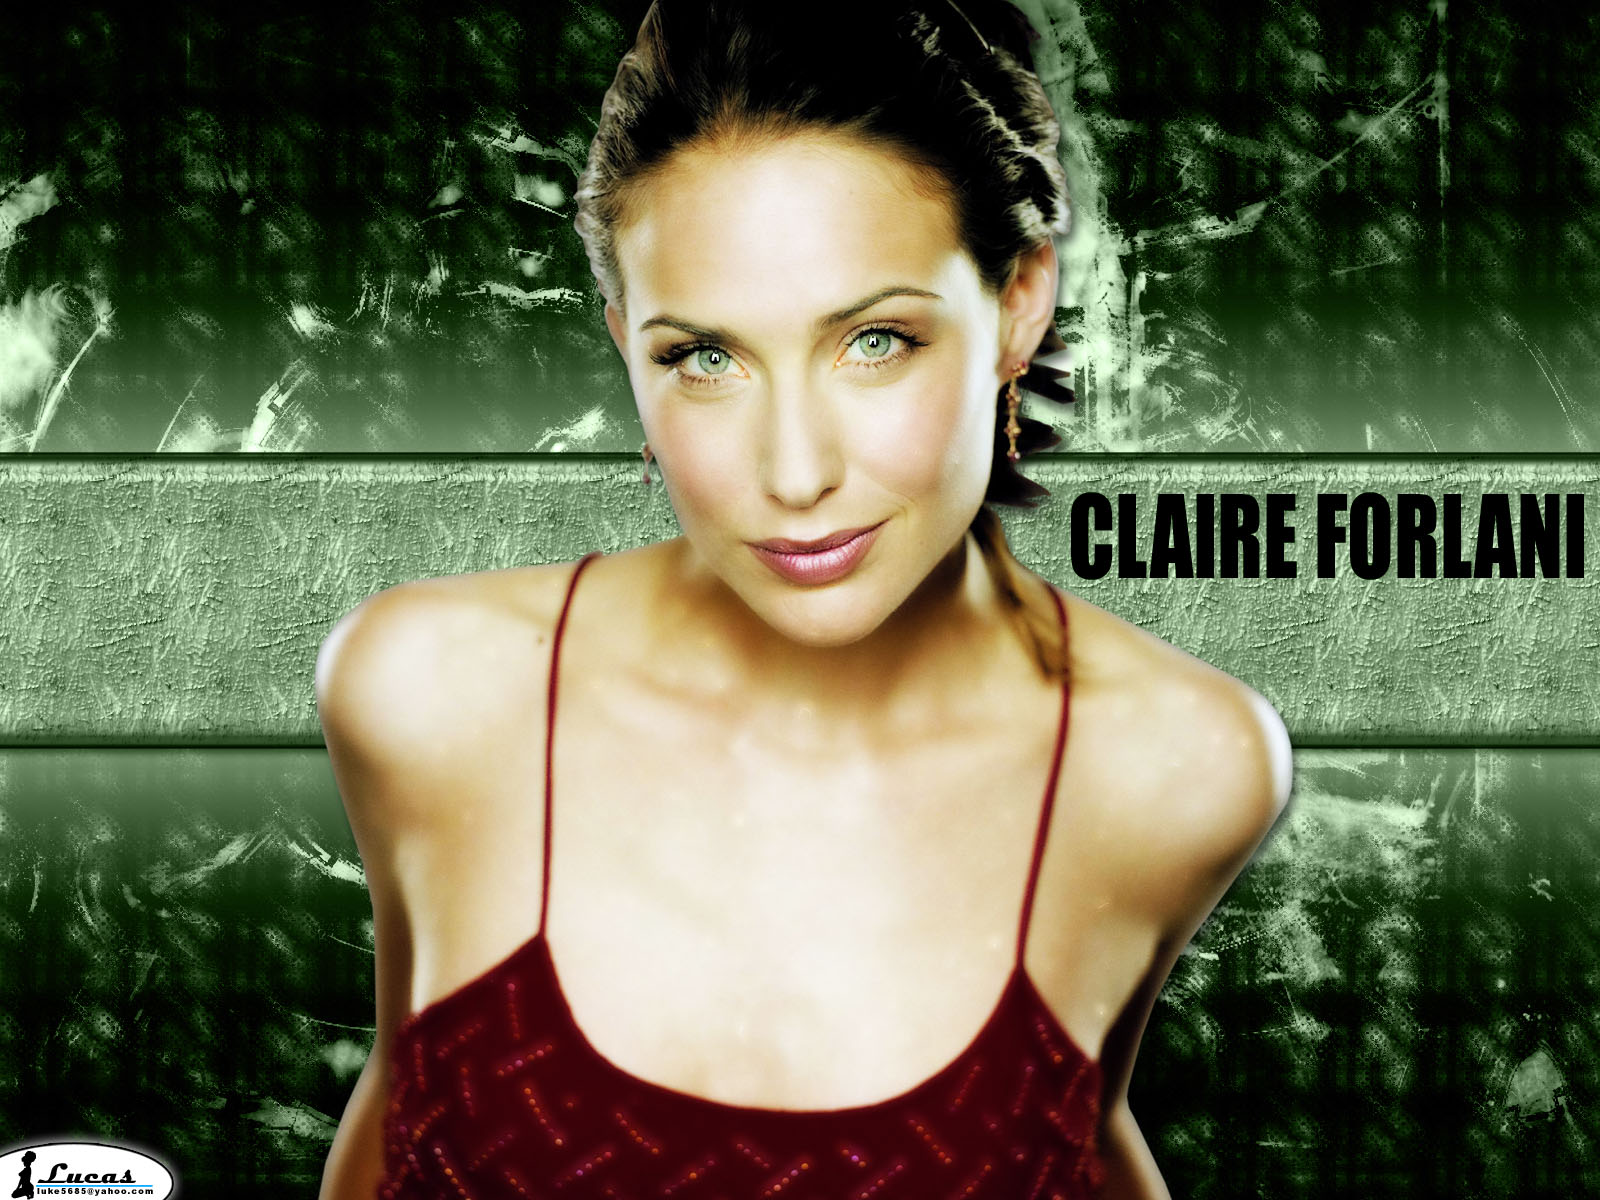 Claire forlani 10